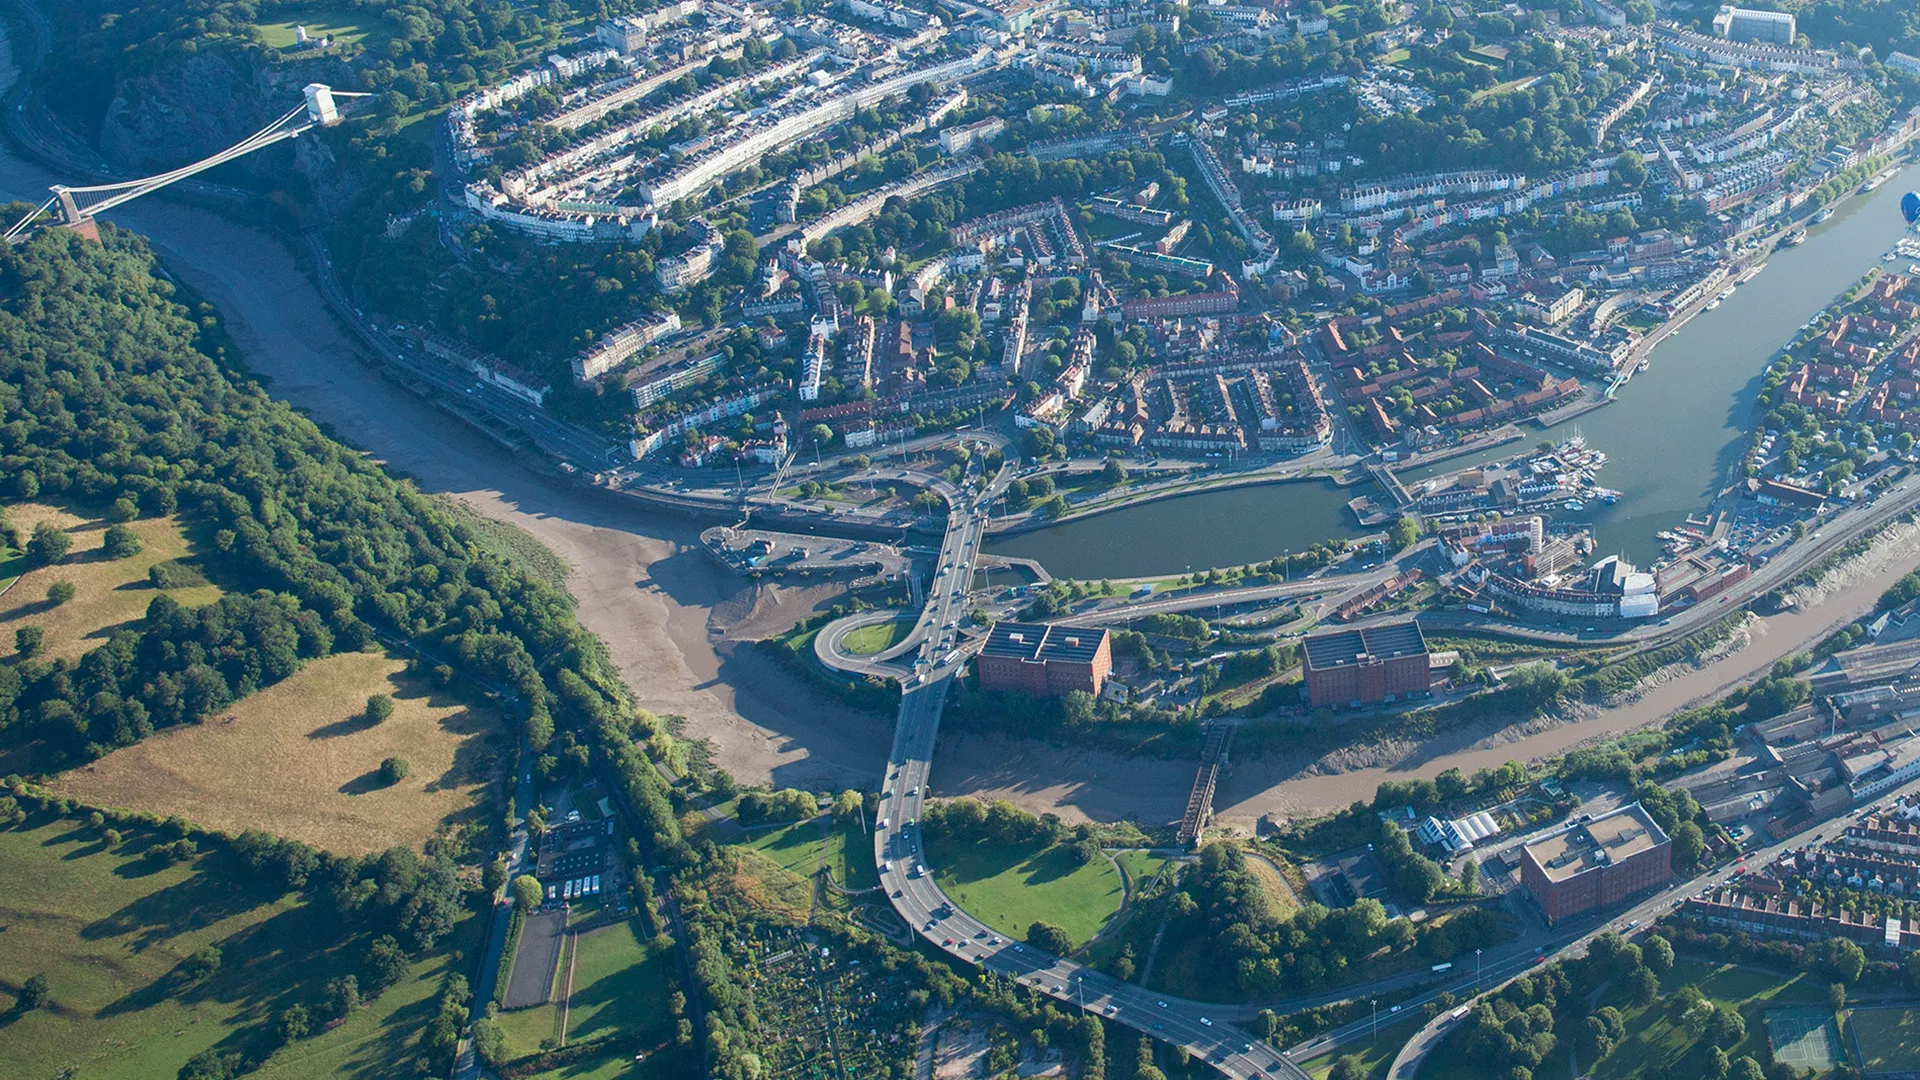 Aerial view of Bristol